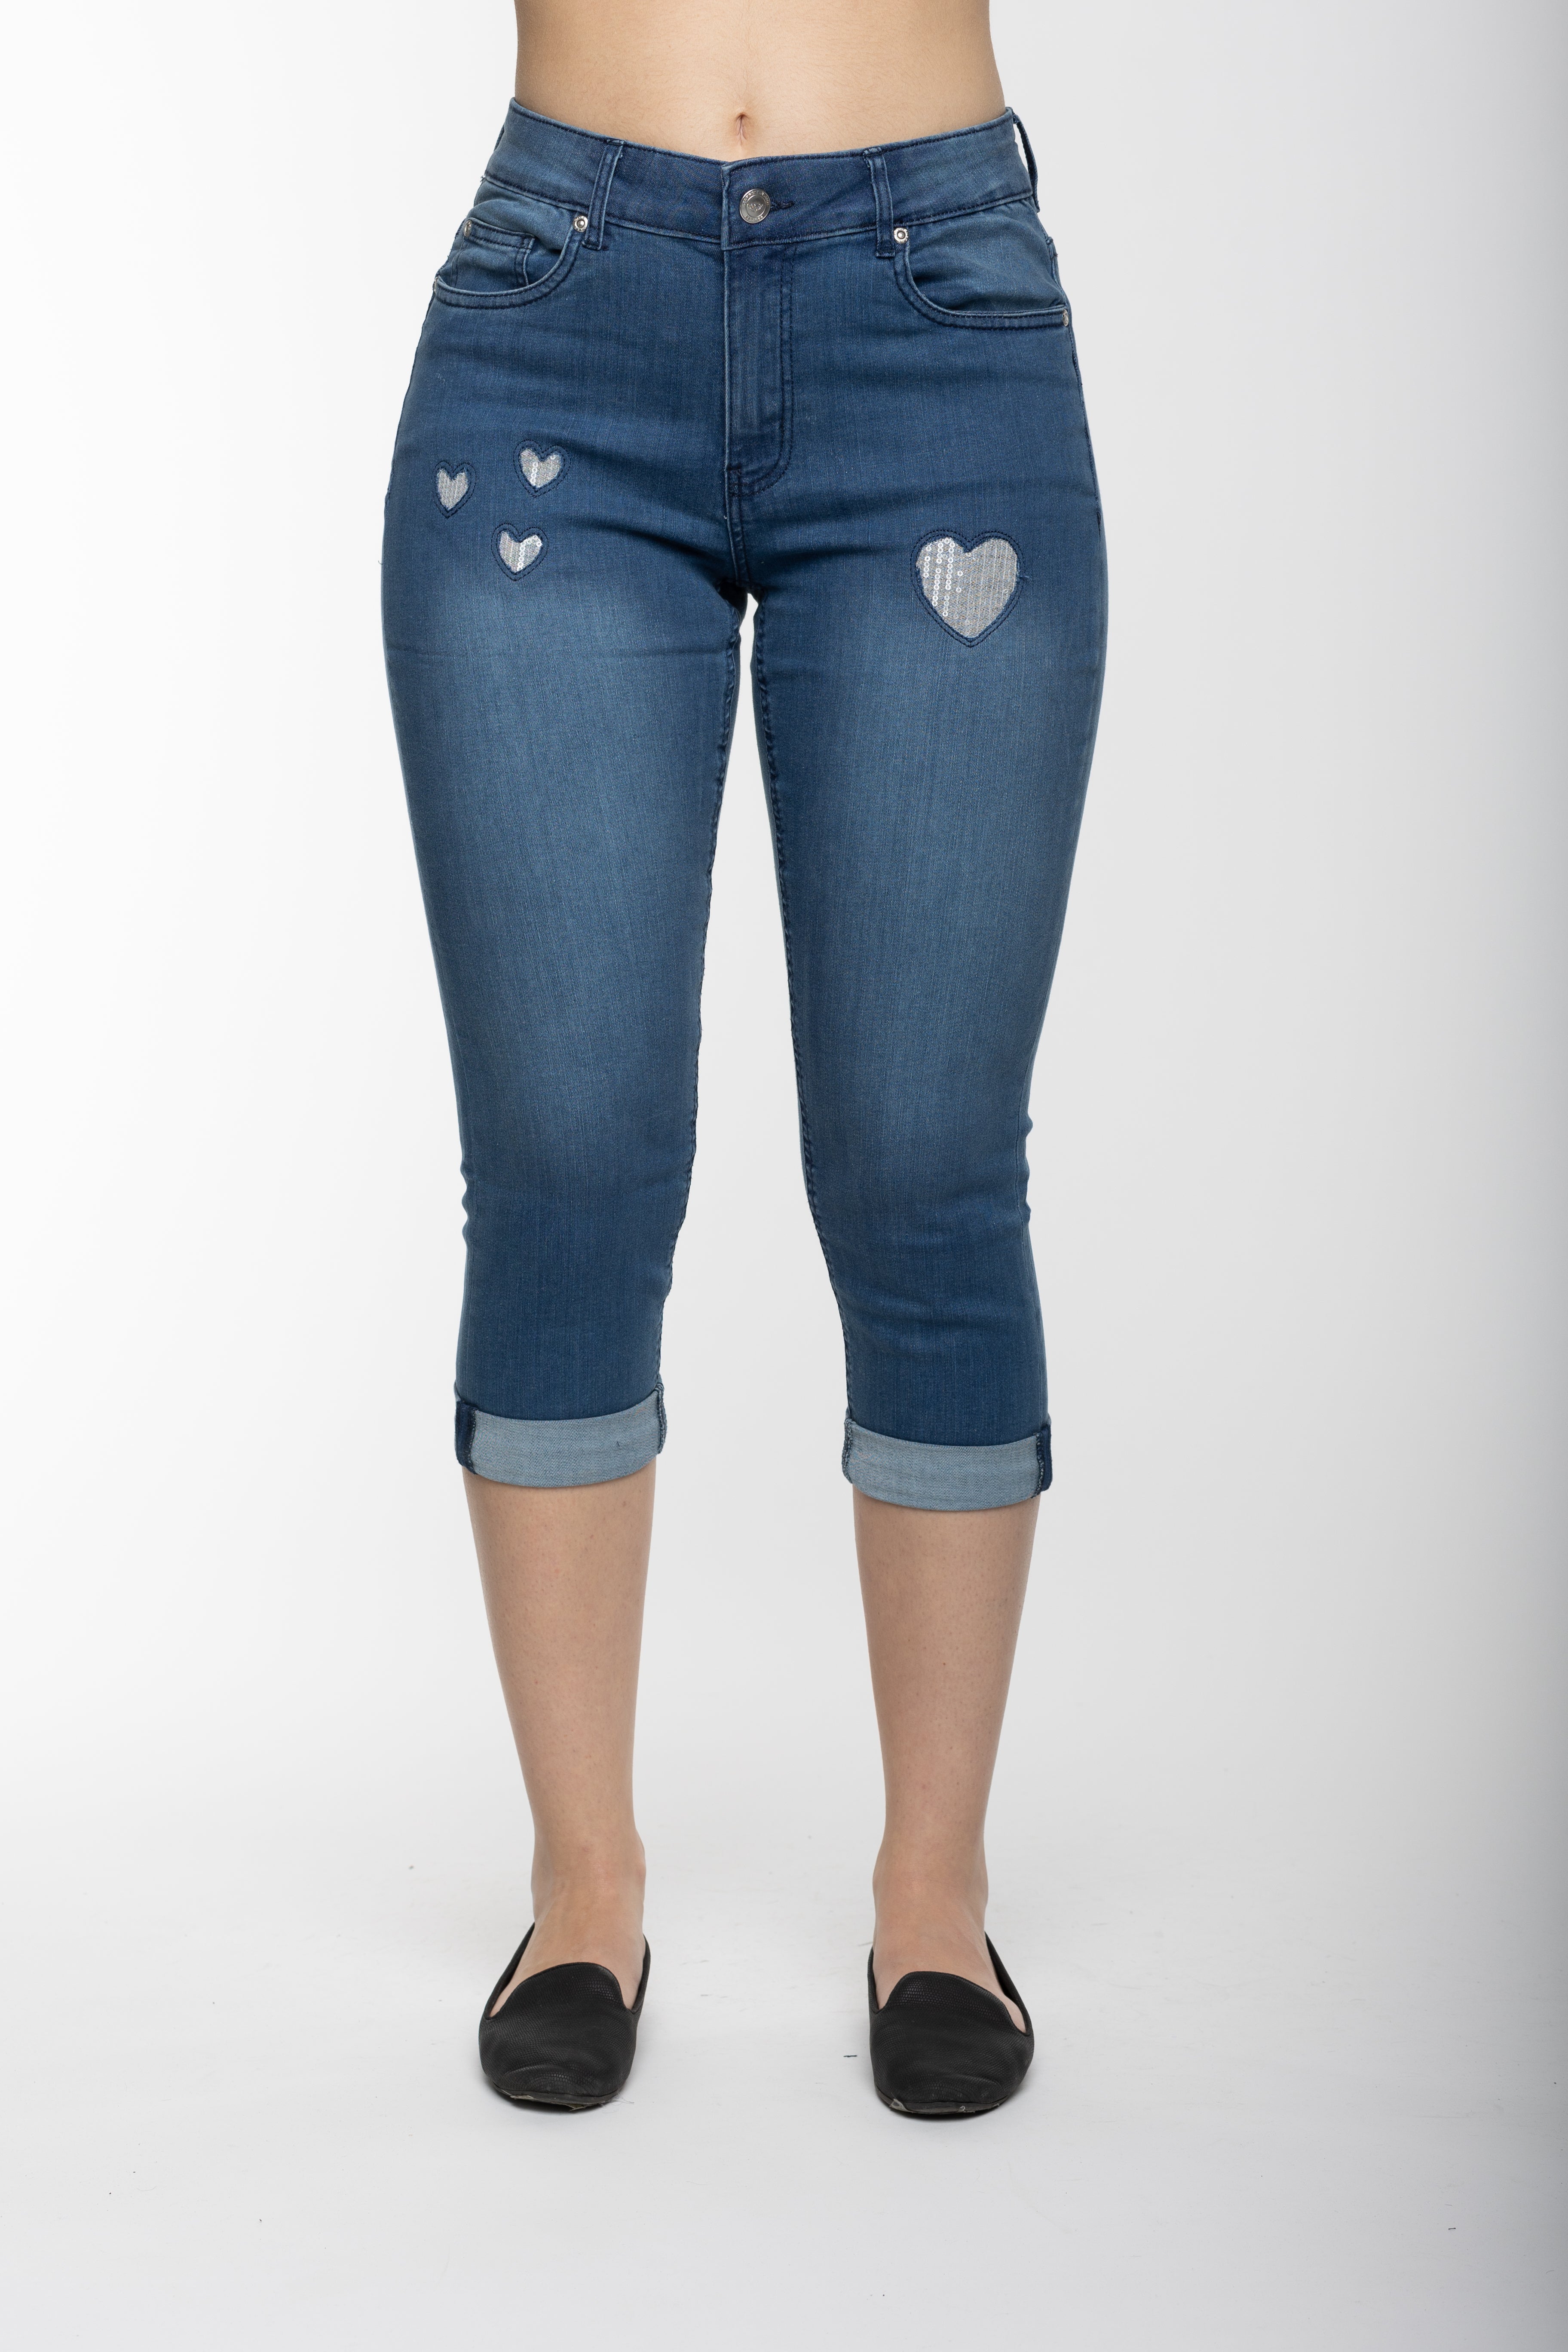 12~Earl Jeans Embellished Carpri's 2% Stretch Bling Capris Size 12 NEW